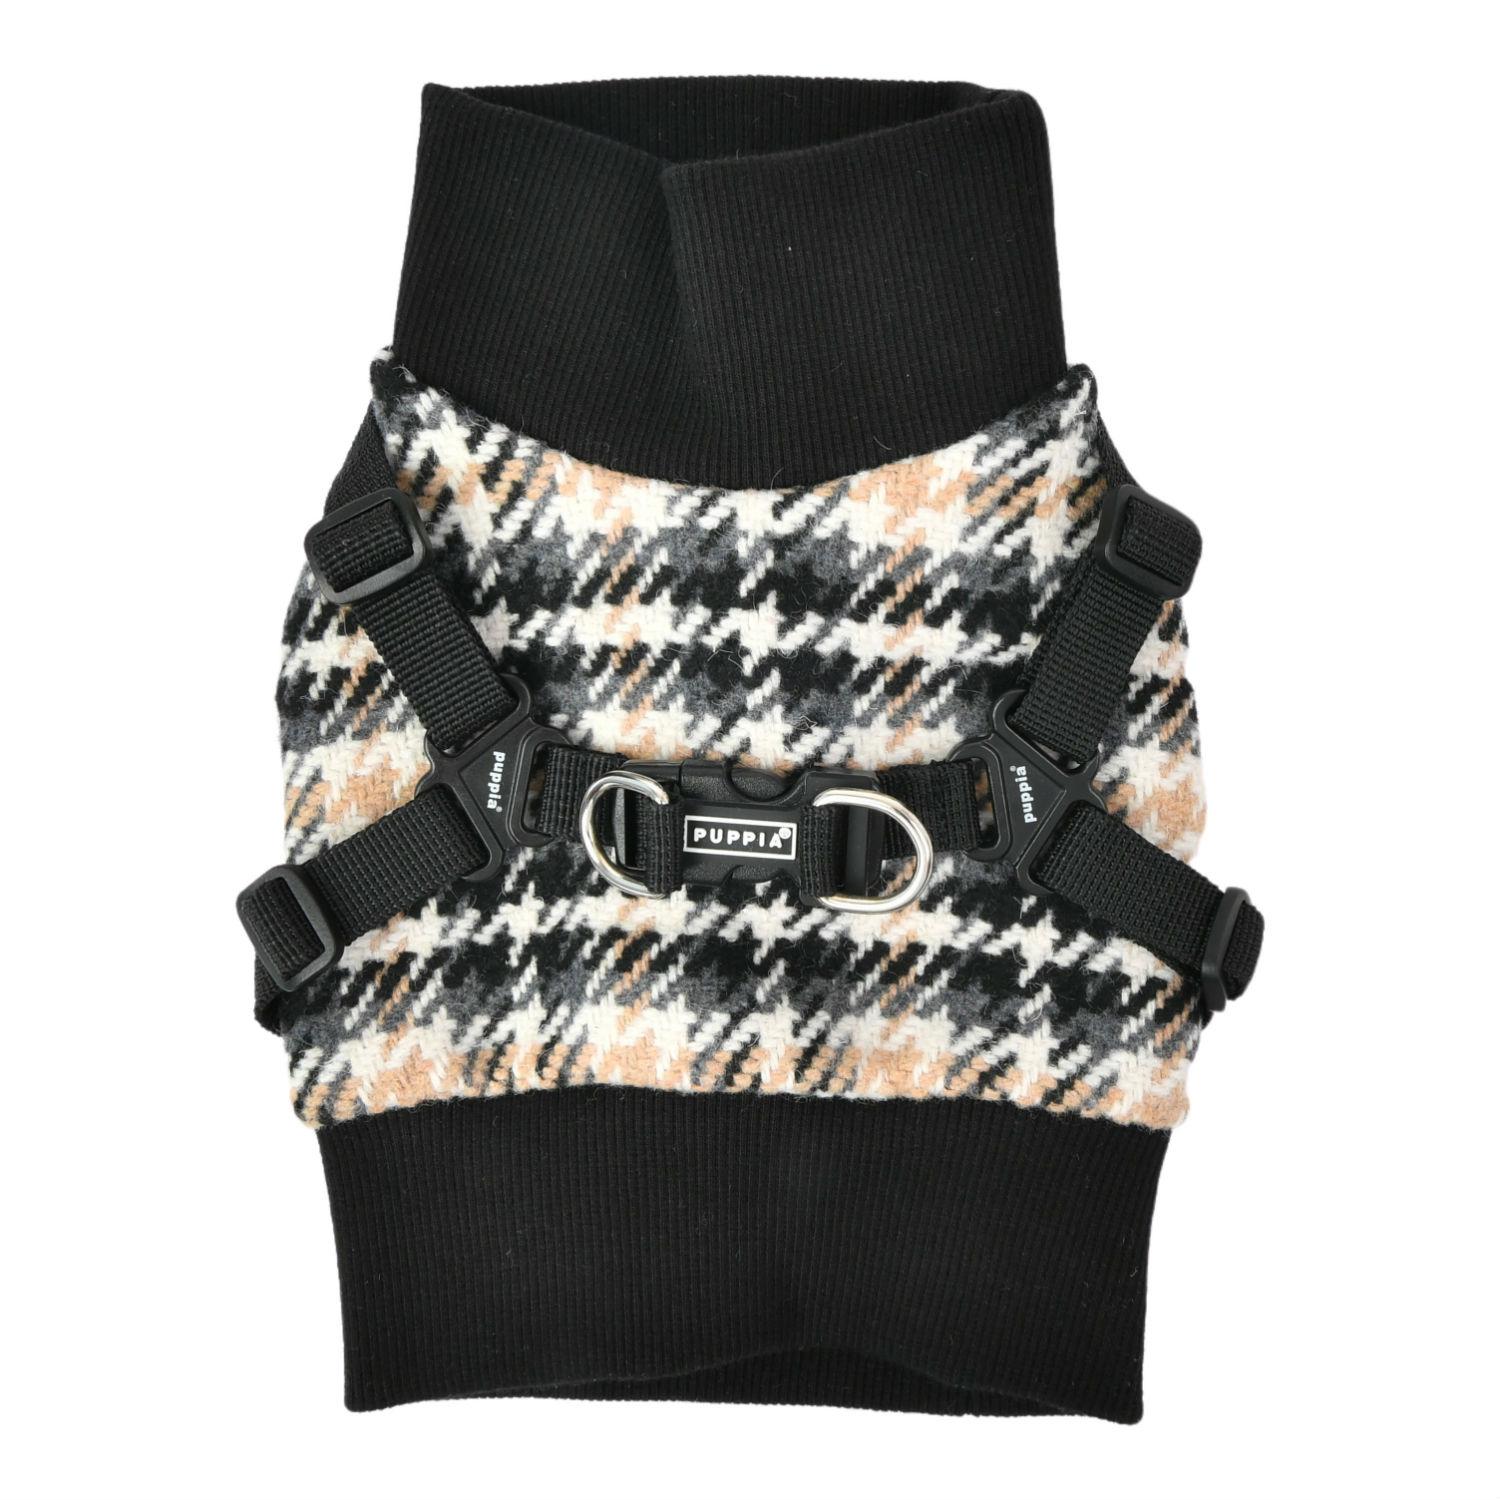 Kellen Pullover Jacket Dog Harness by Puppia - Black